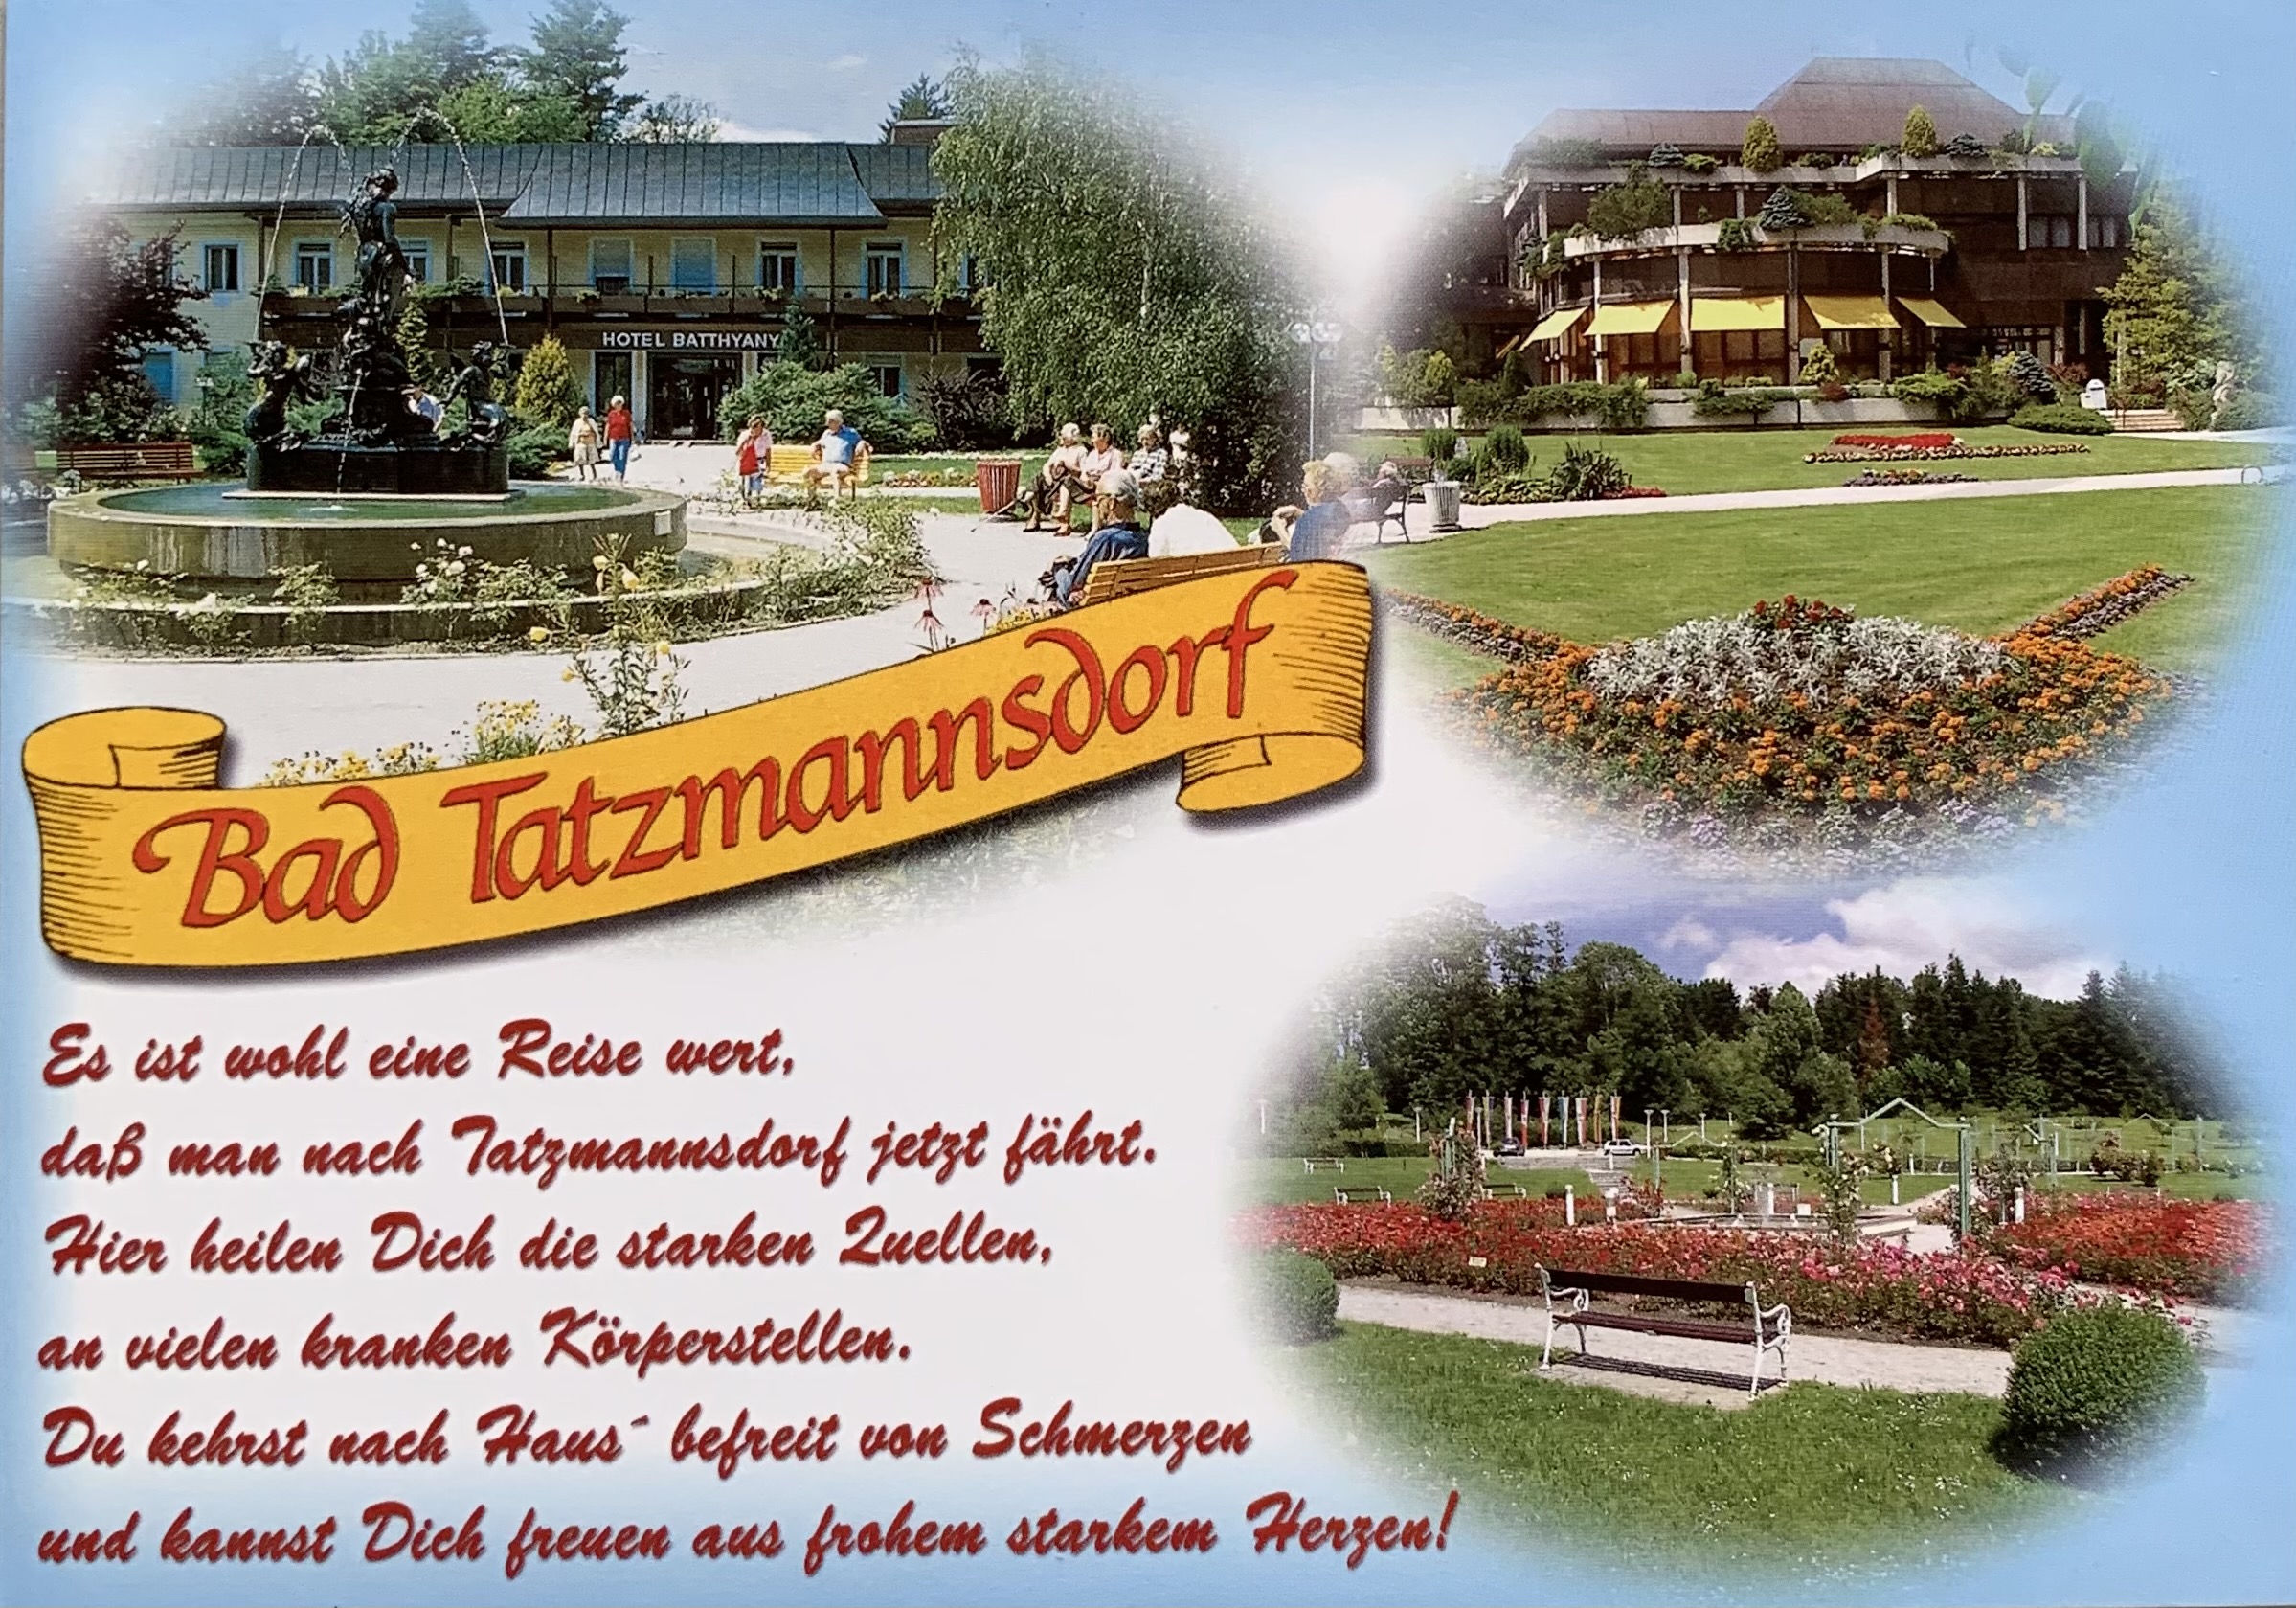 AK - Bad Tatzmannsdorf 01-7431-26